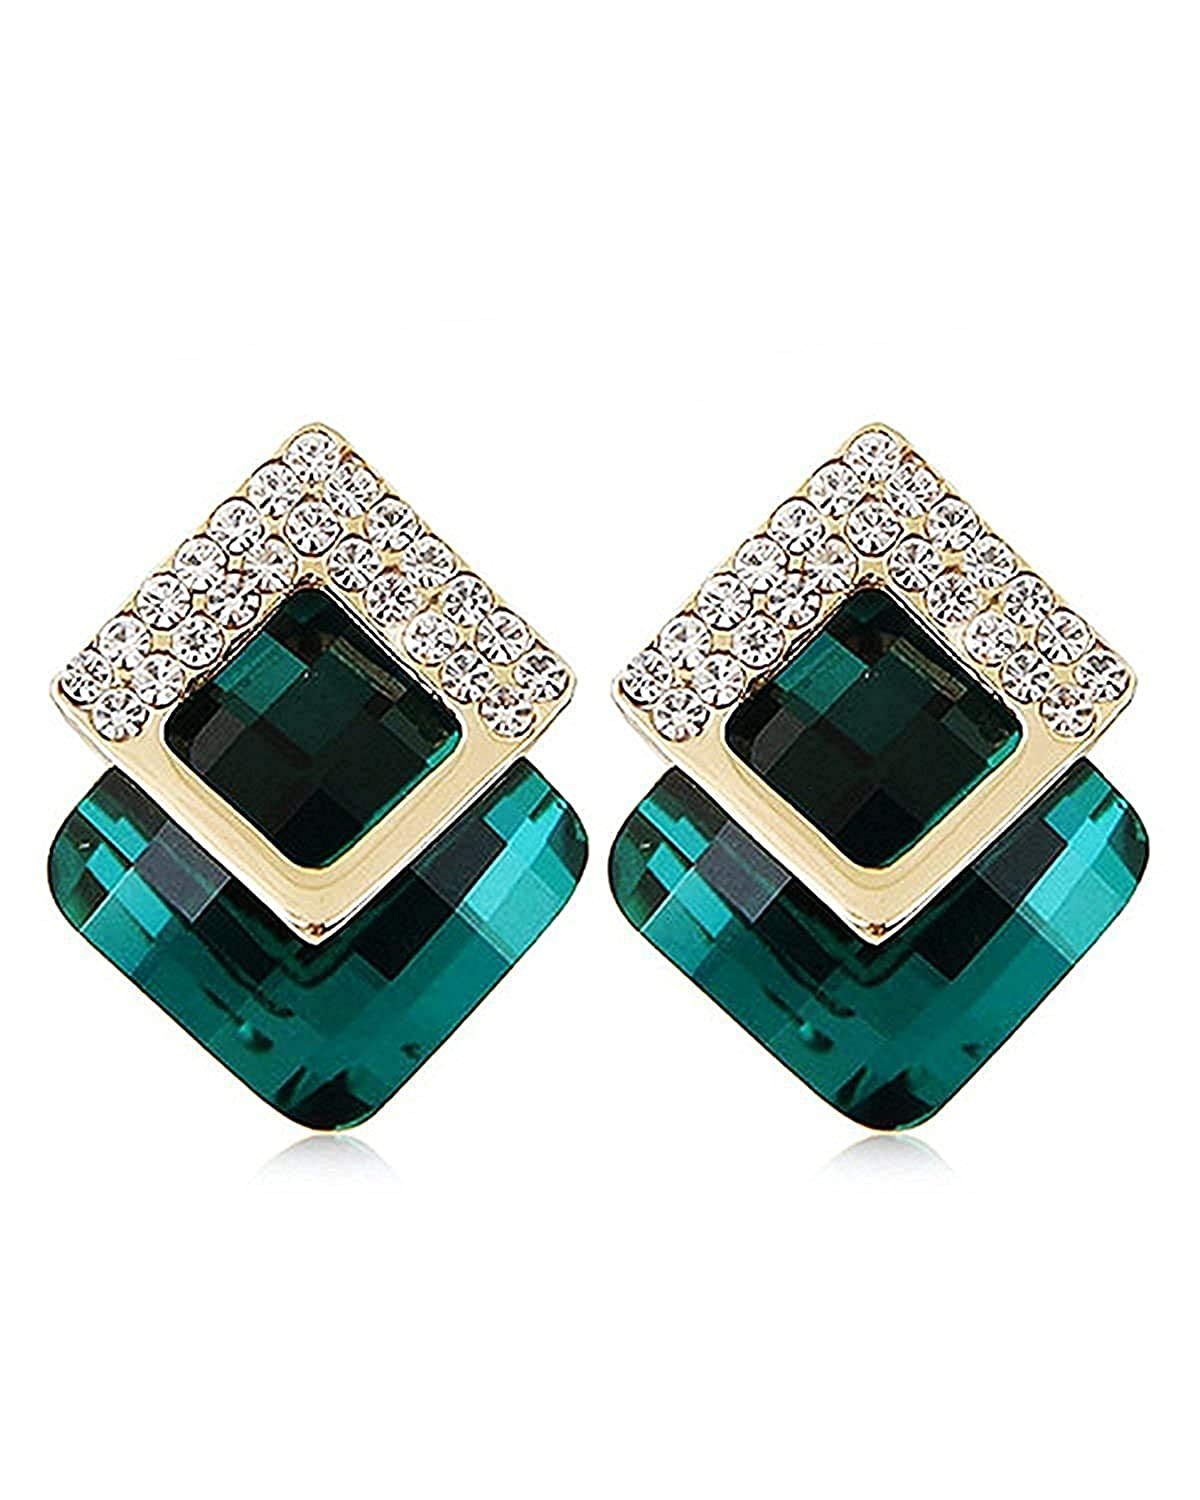 Buy Shining Diva Fashion Latest Italian Designer 18k Gold Plated Crystal Earrings For Women and Girls